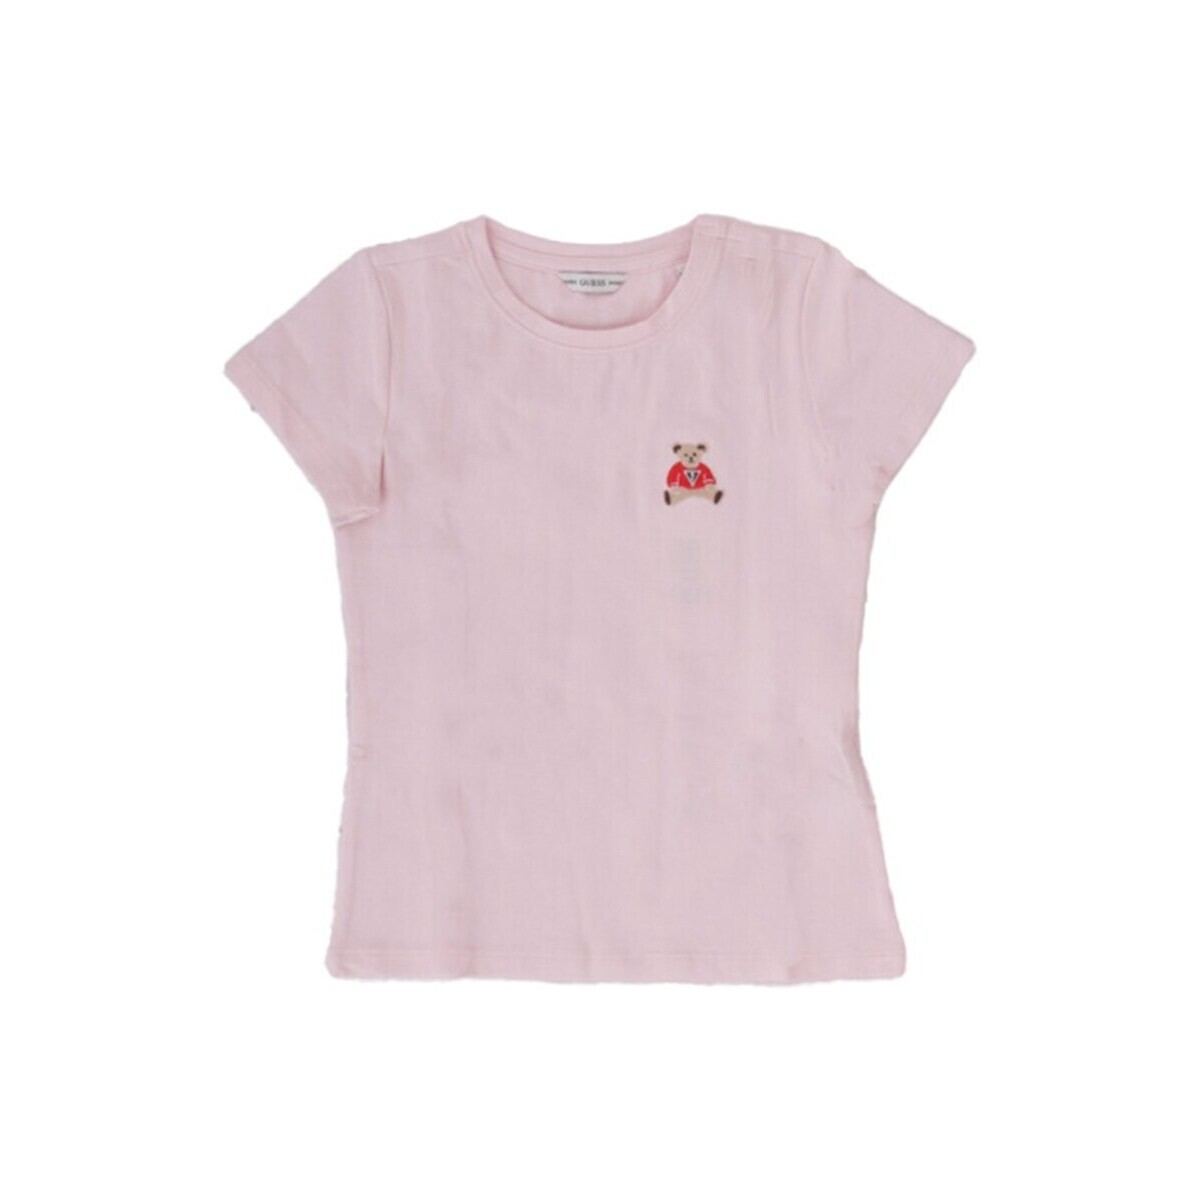 Textiel Meisjes T-shirts korte mouwen Guess J4RI44KA0Q1 Roze